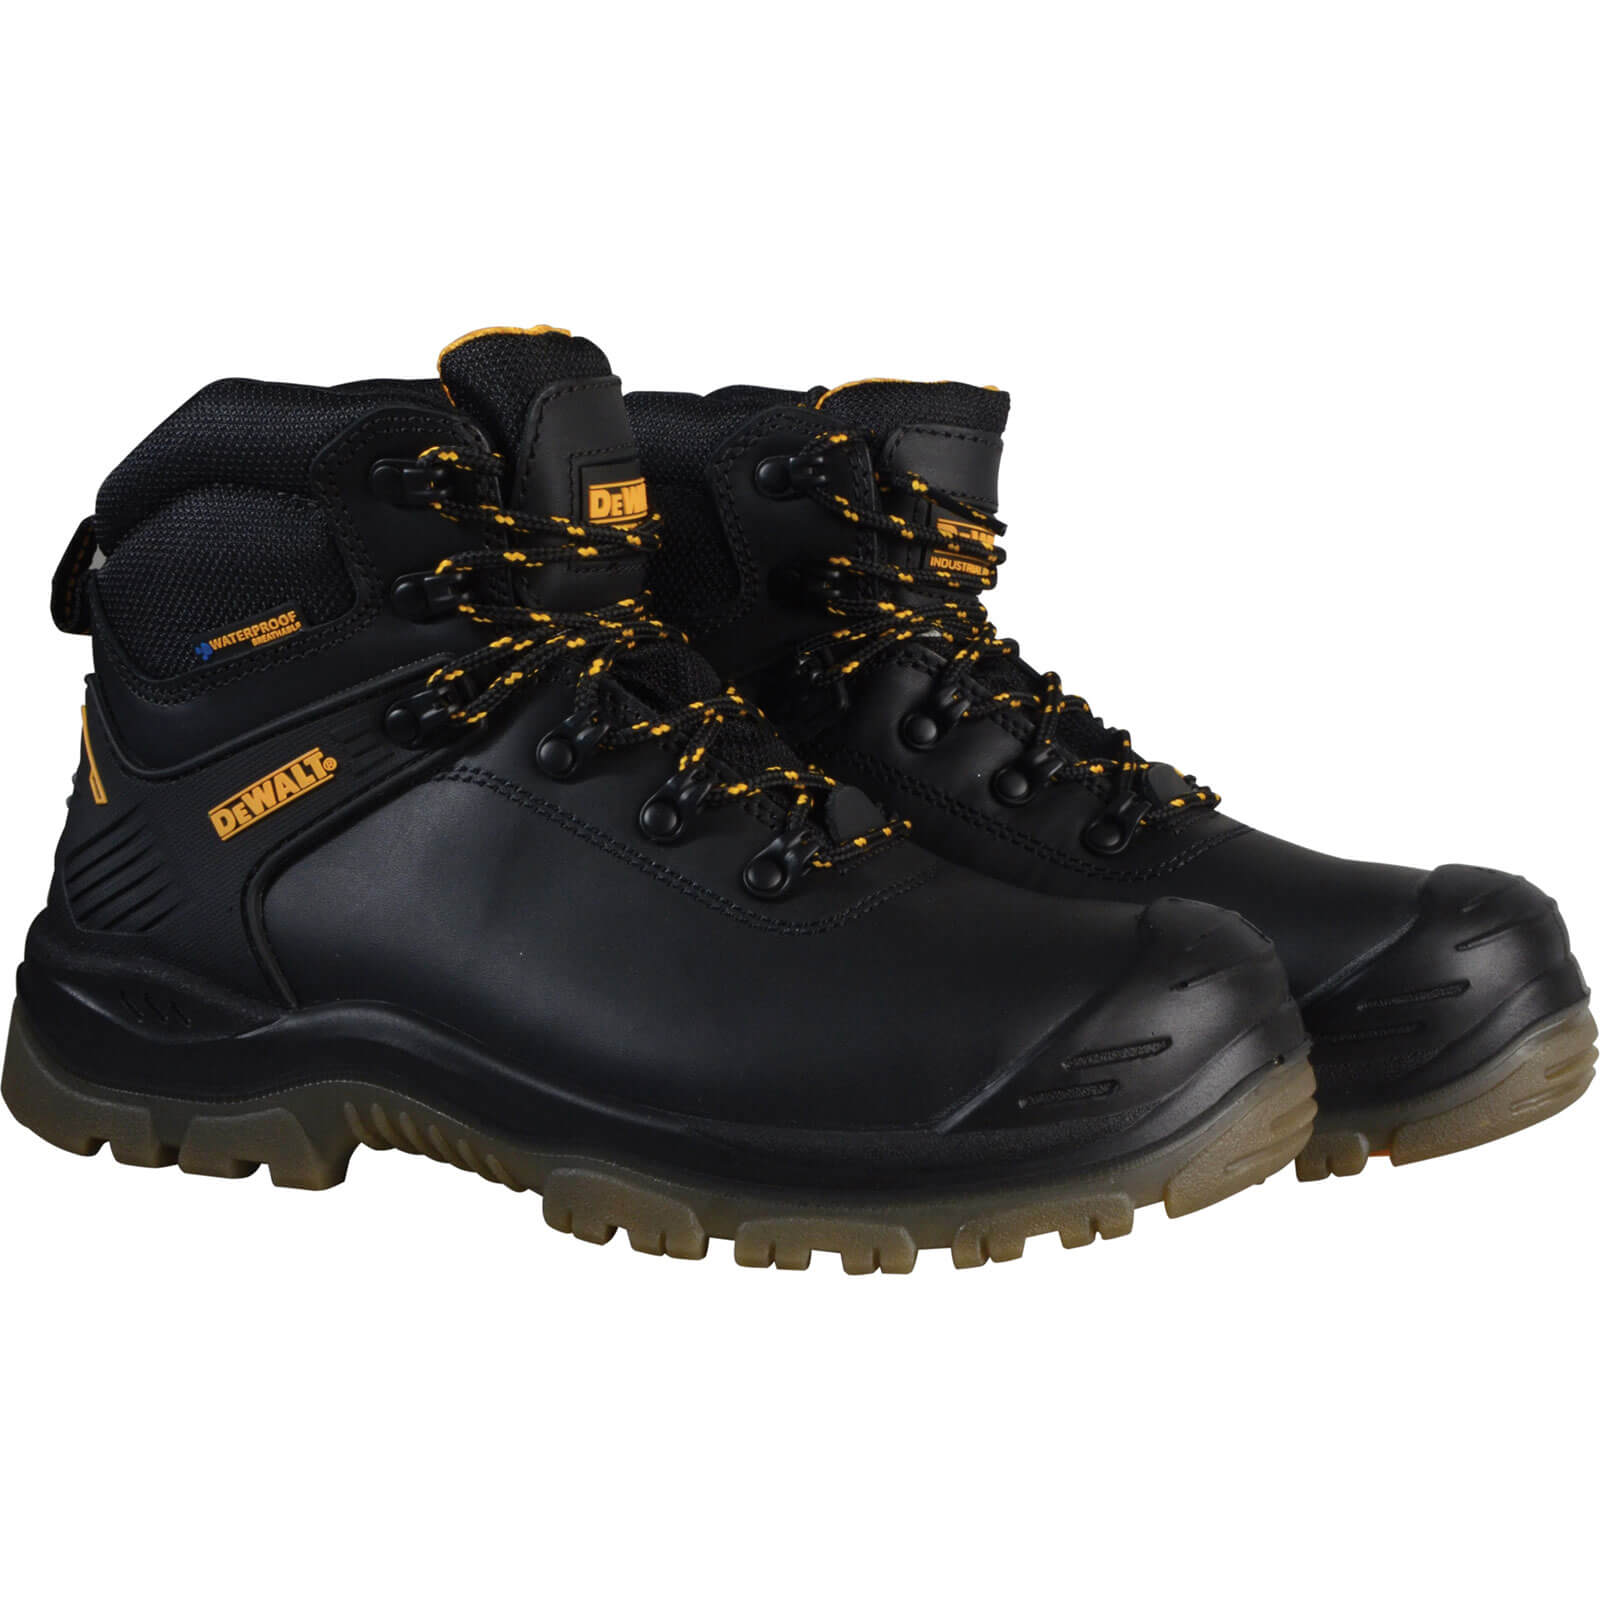 DeWalt Newark Waterproof Safety Hiker Boots Black Size 11